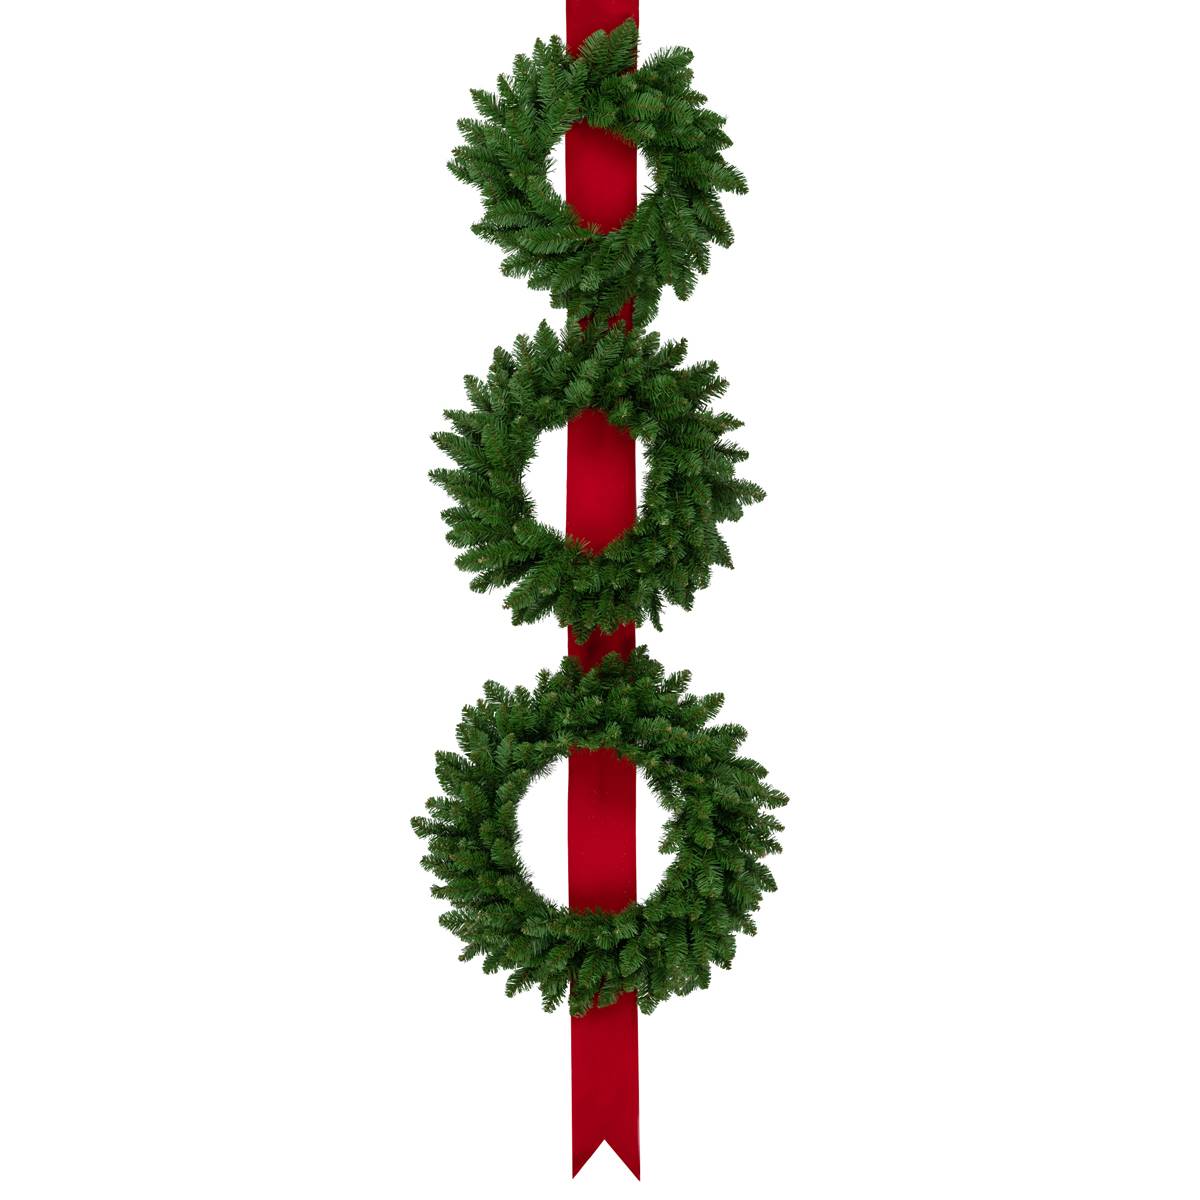 Northlight Seasonal Hanging Wreaths On Red Ribbon - Set Of 3